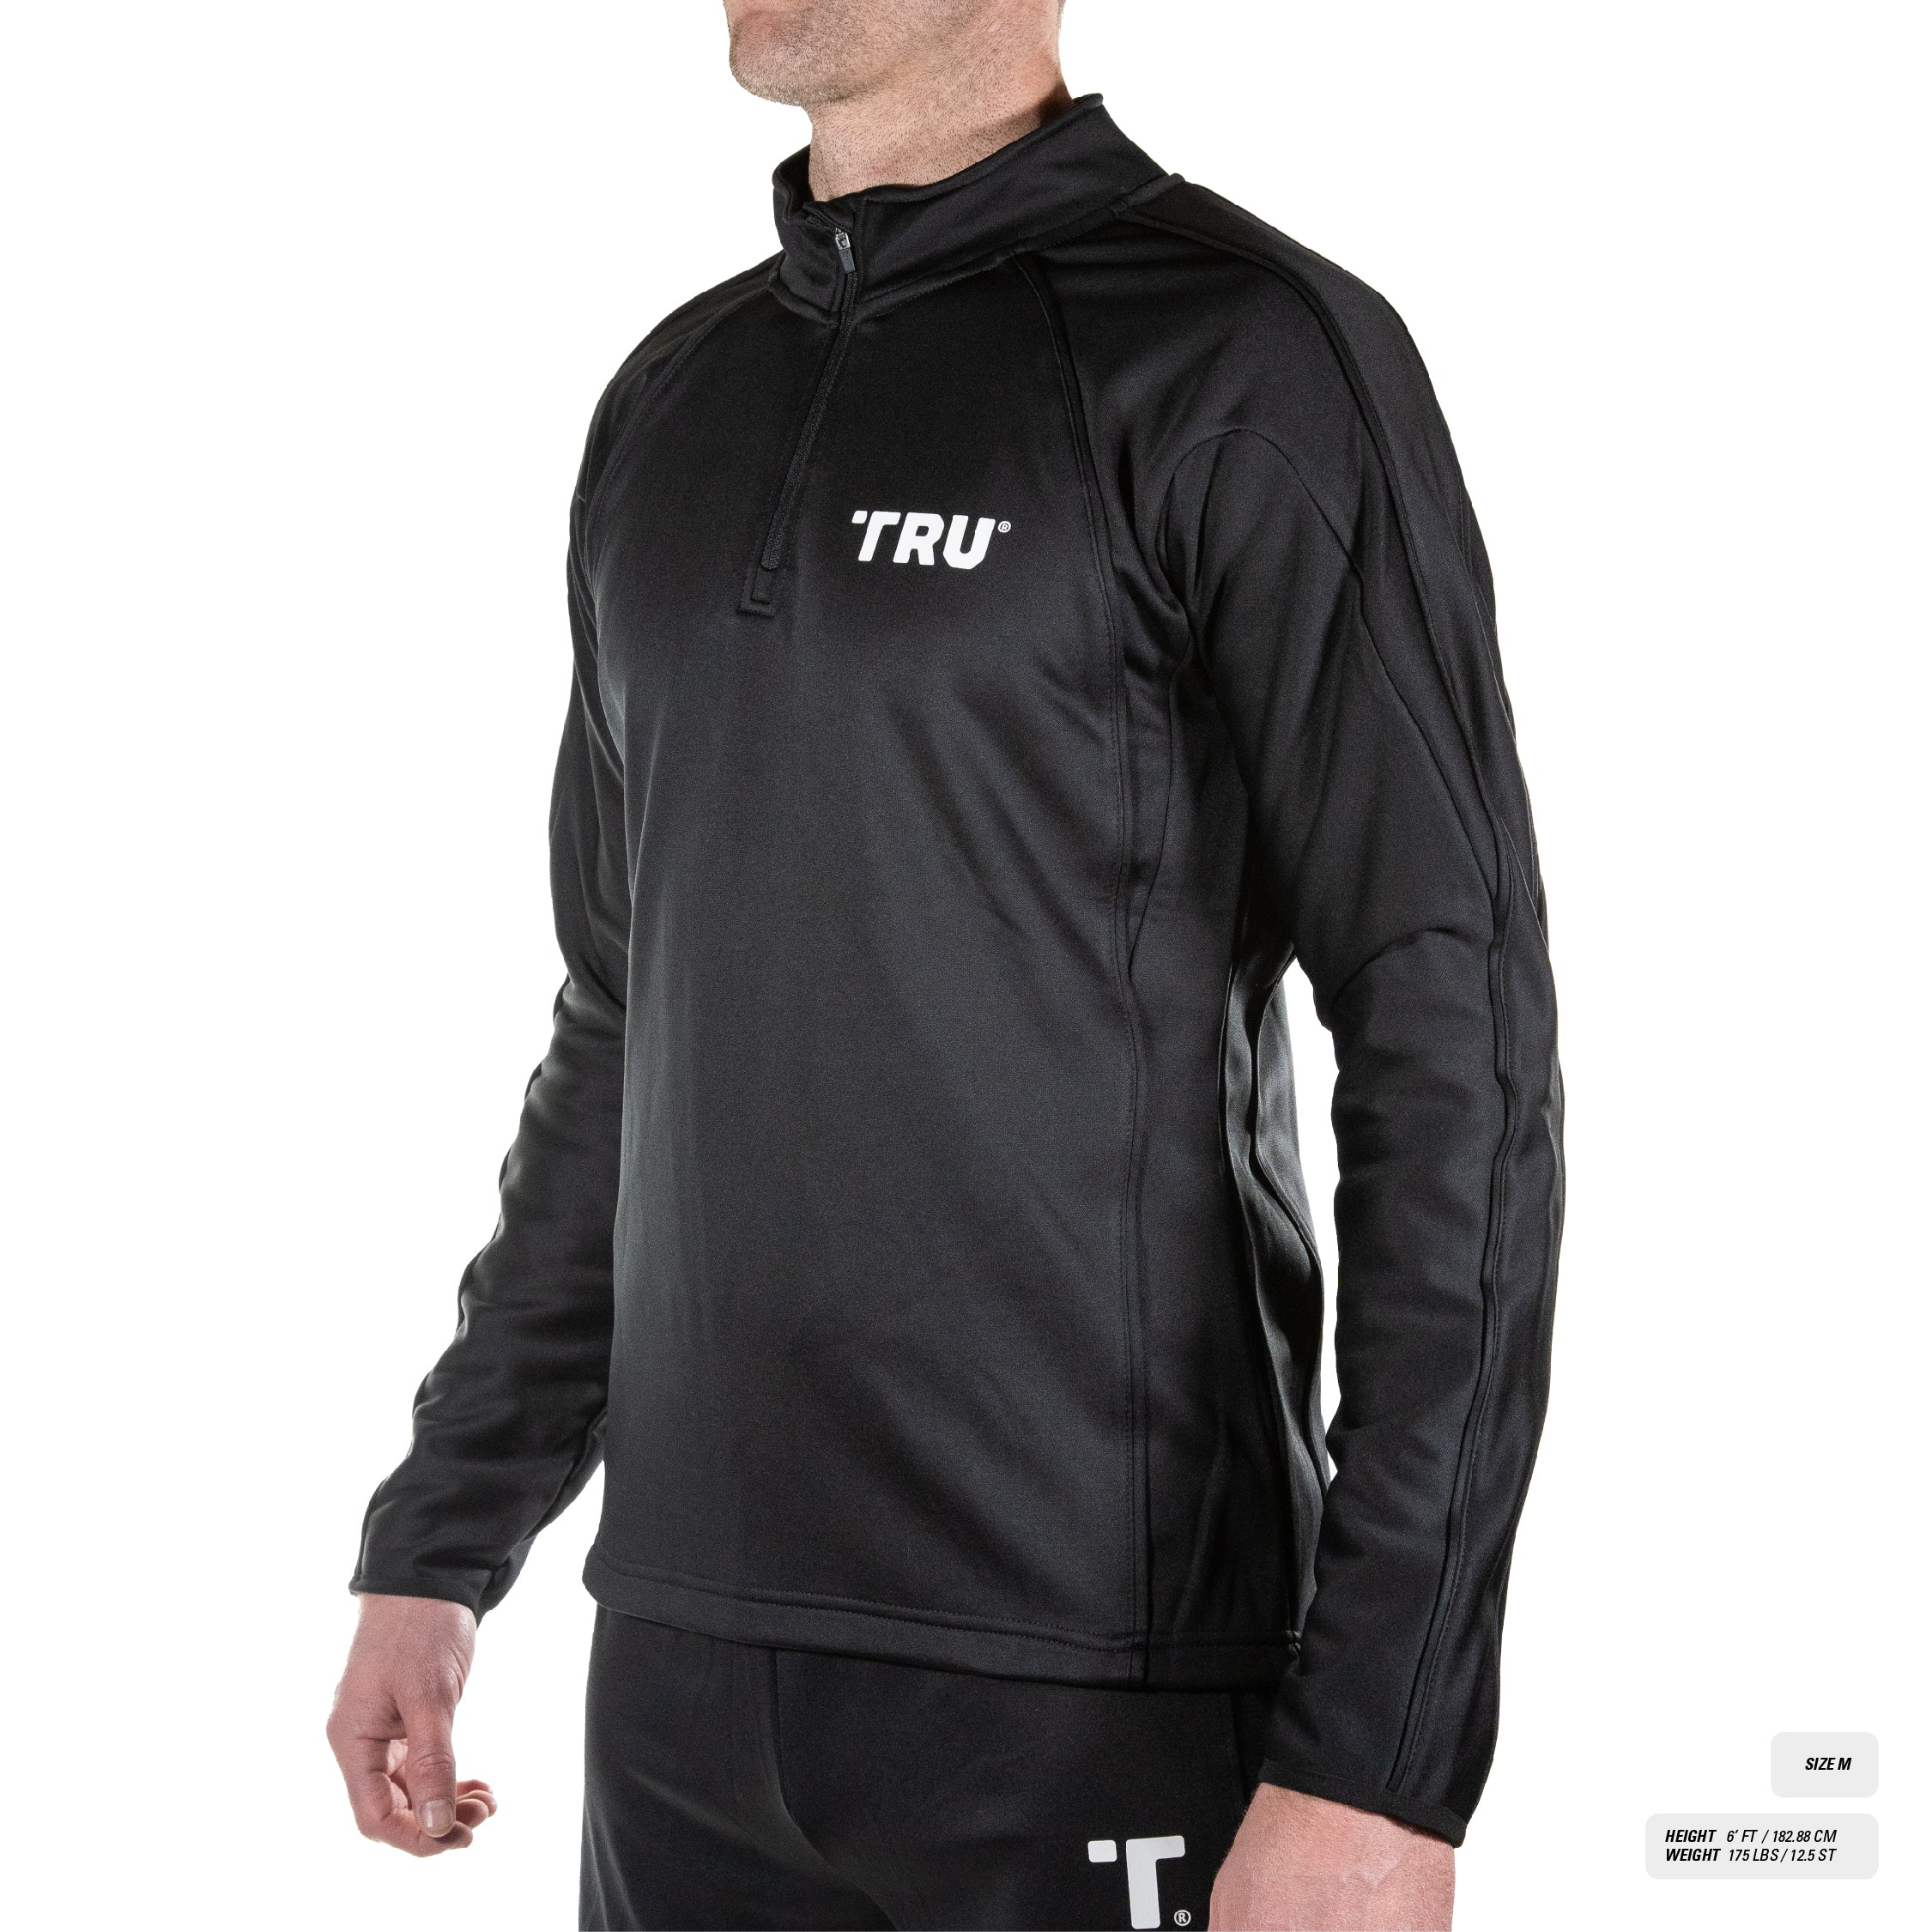 TRU 924 - Thermal Quarter Zip